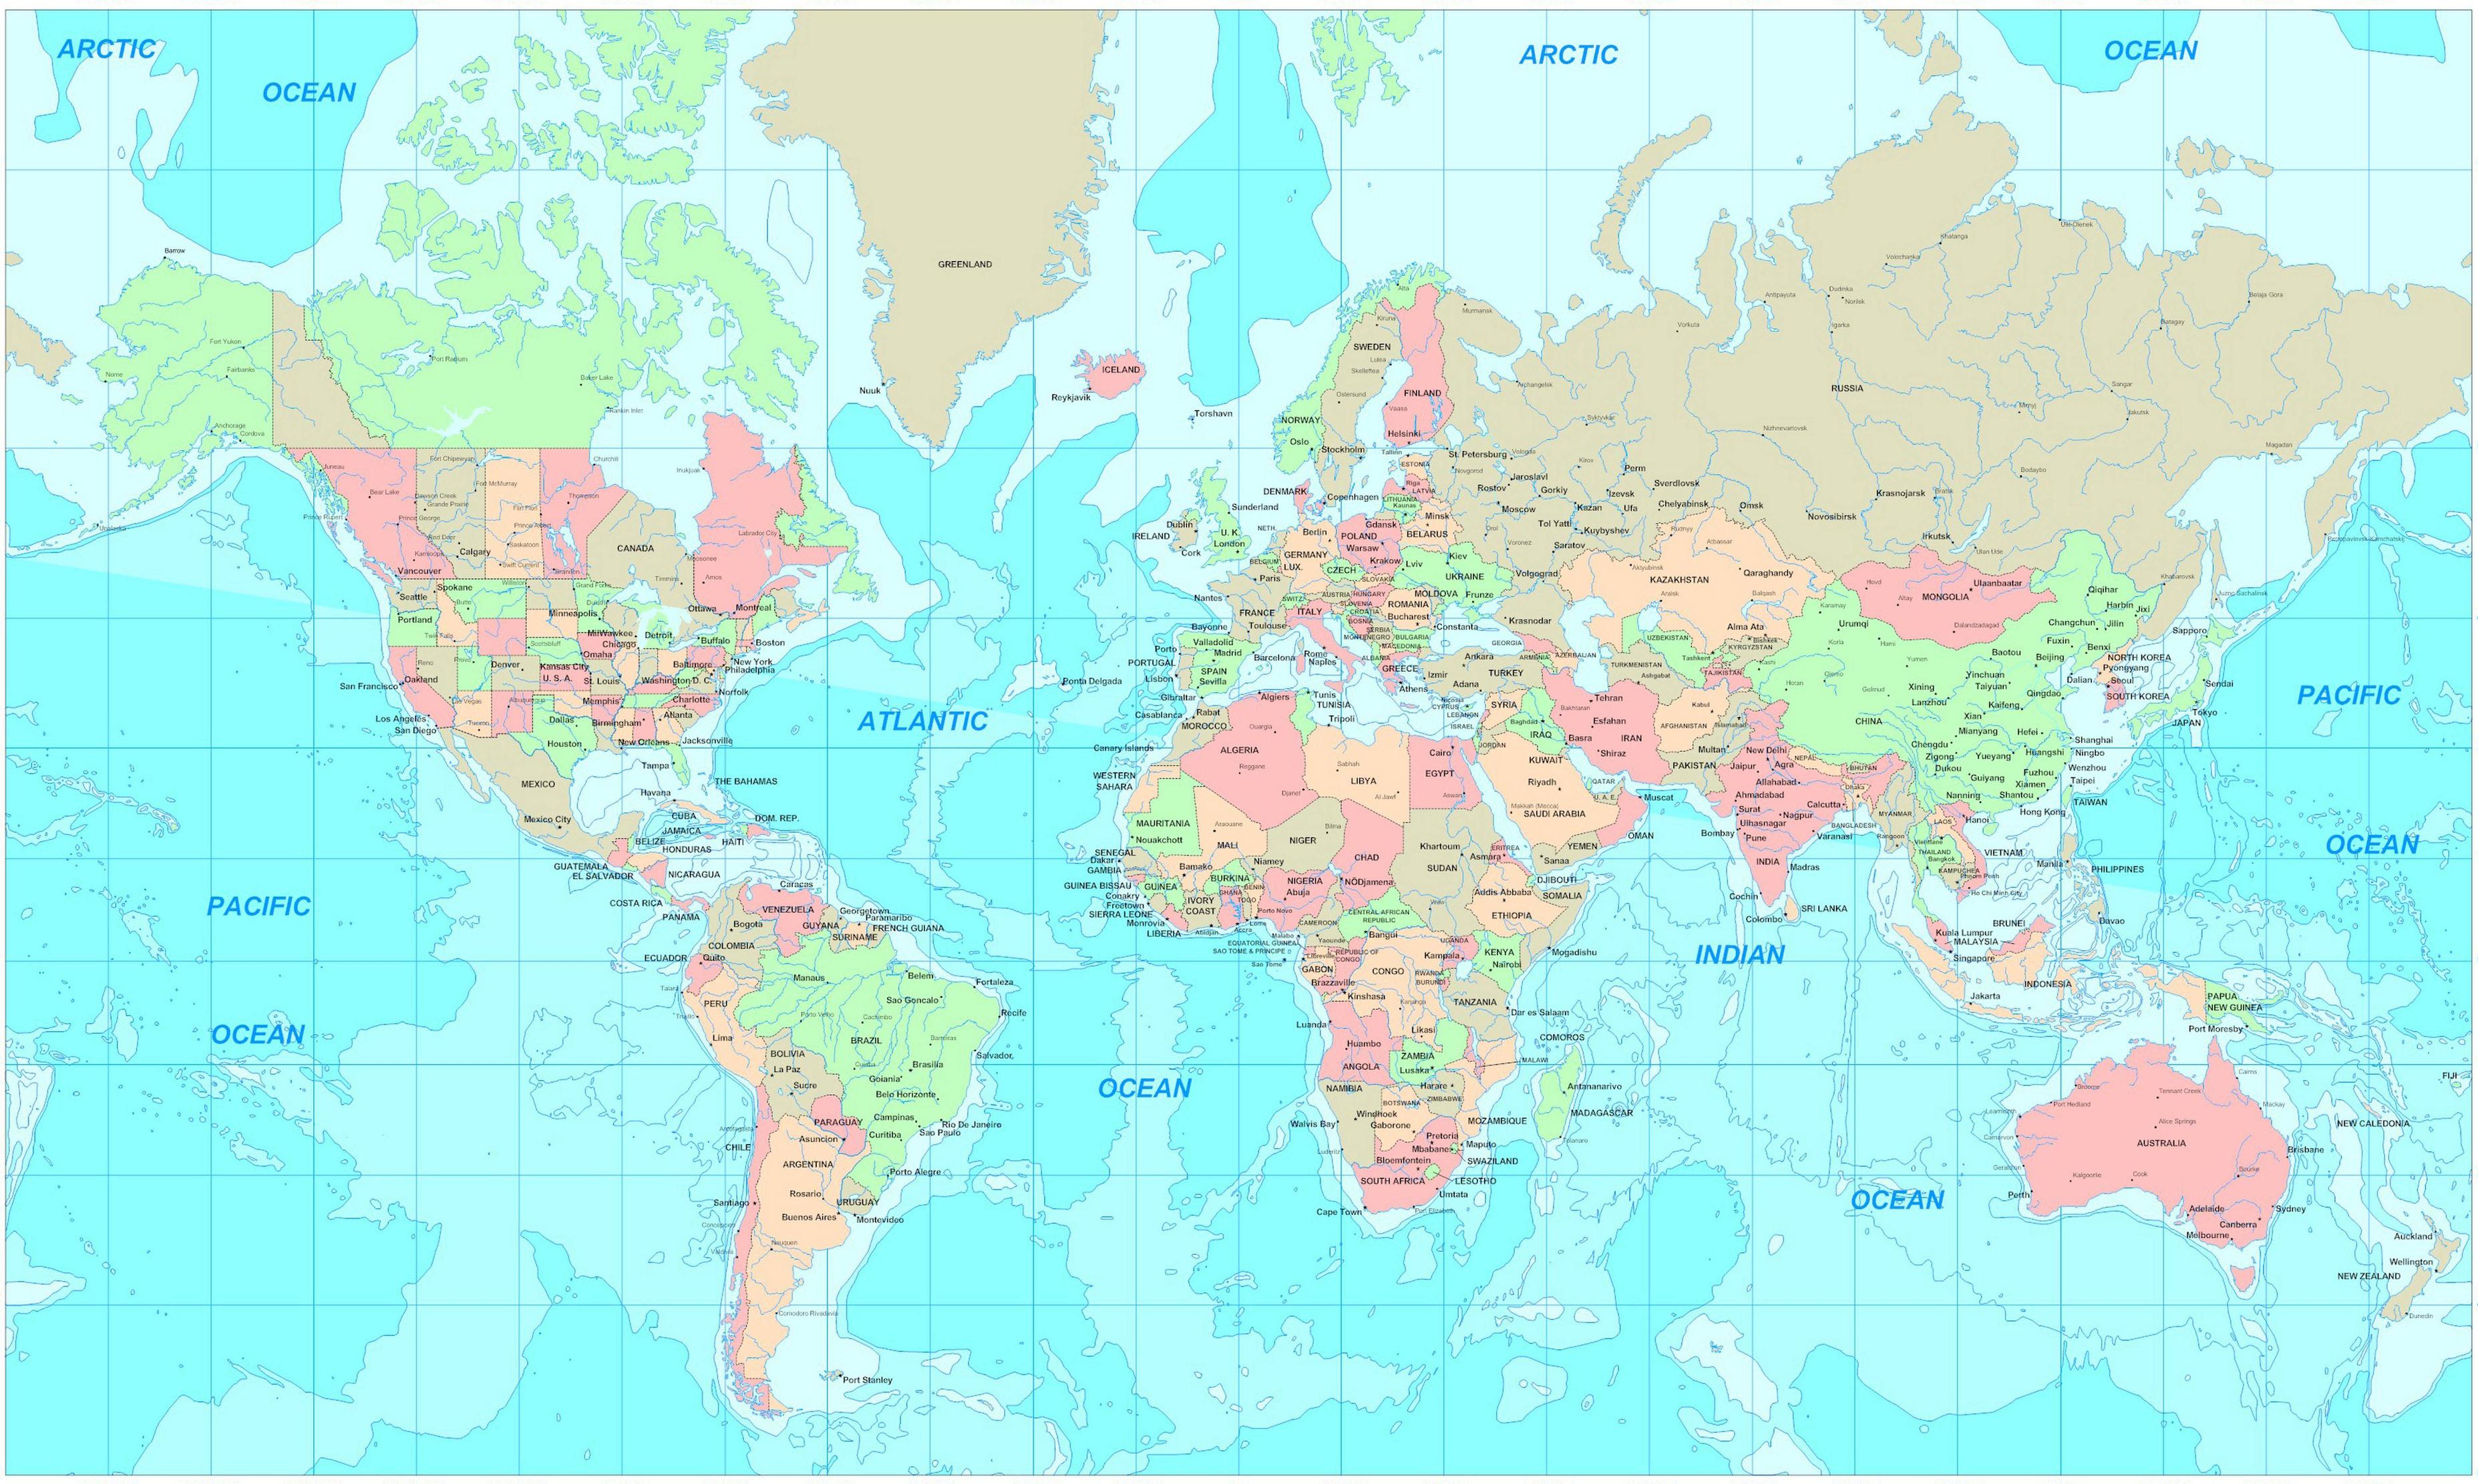 HD Wallpapers World Map | PixelsTalk.Net